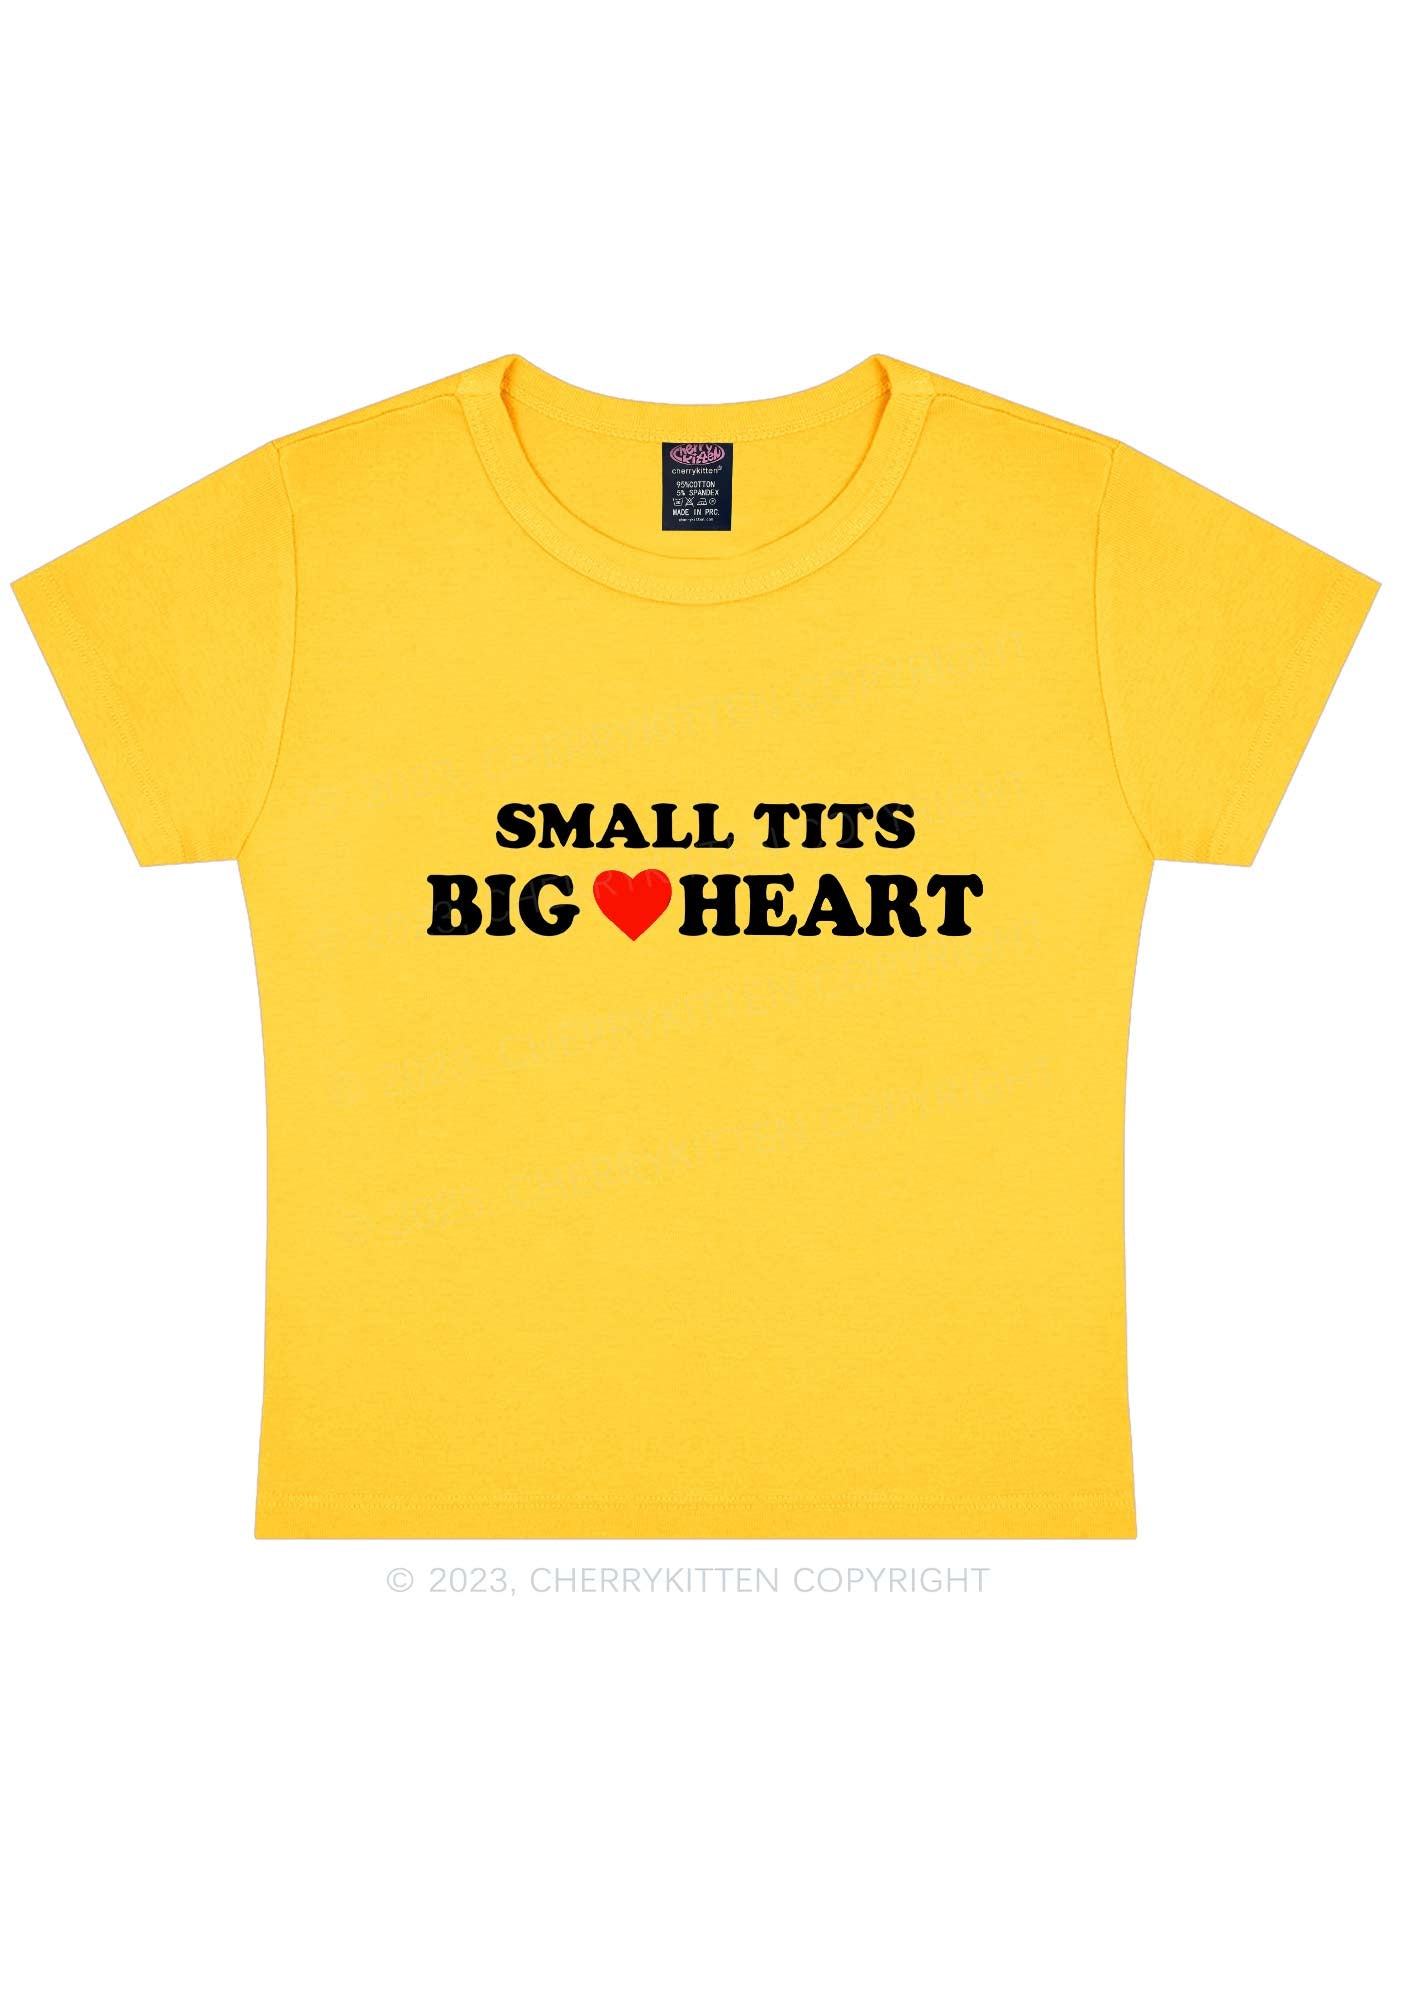 Small Tits Big Heart Shirt boobs, T-Shirt Tits, Shirt Tities T-Shirt Boobs  Breasts Funny Boobs t-shirt boobies shirt funny gift Mini Skirt for Sale  by SLV7R